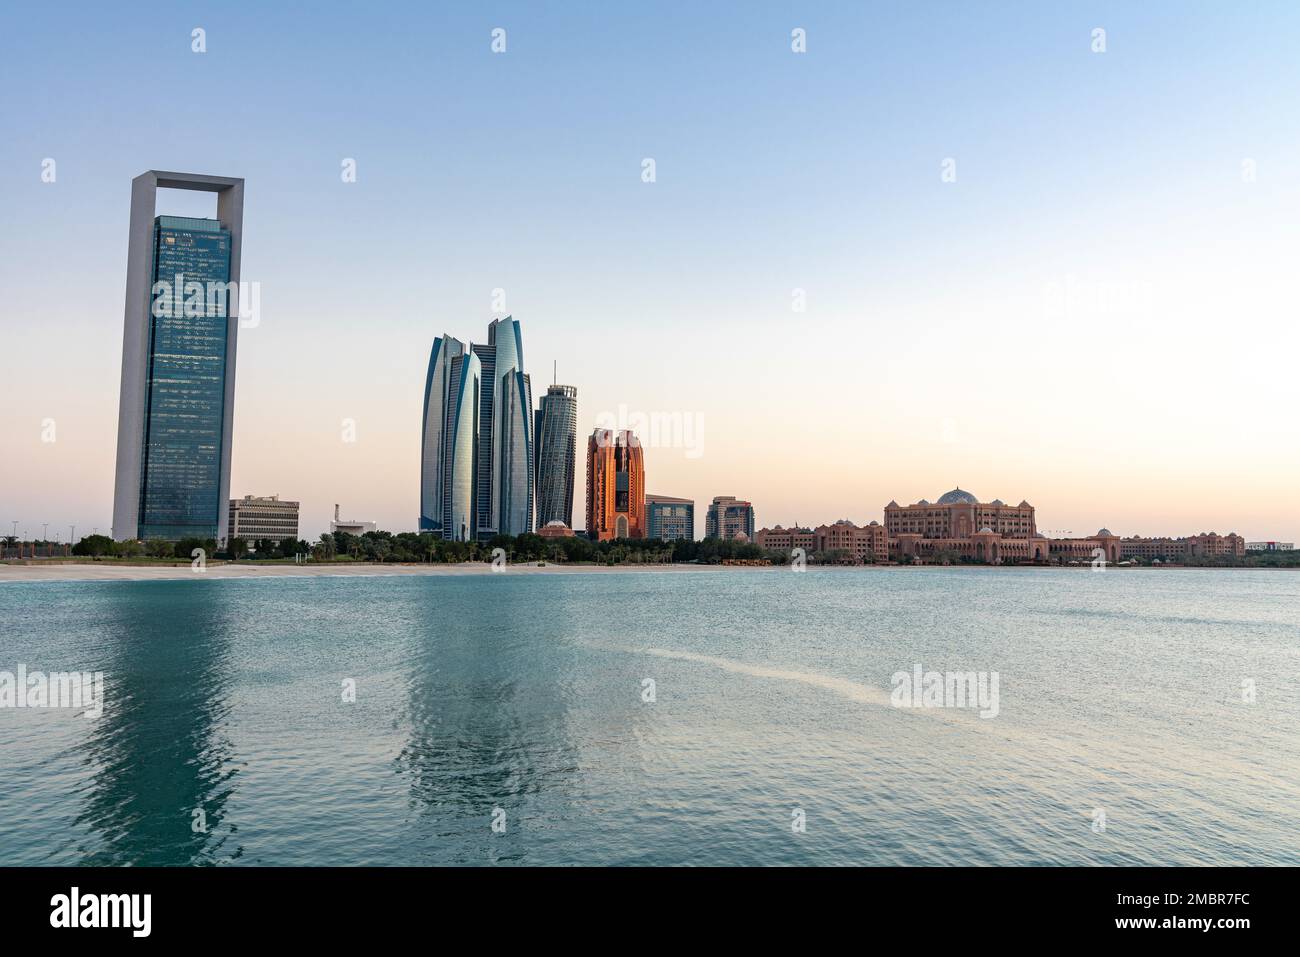 The united Arab emirates ABU dhabi national oil company headquarters Stock Photo